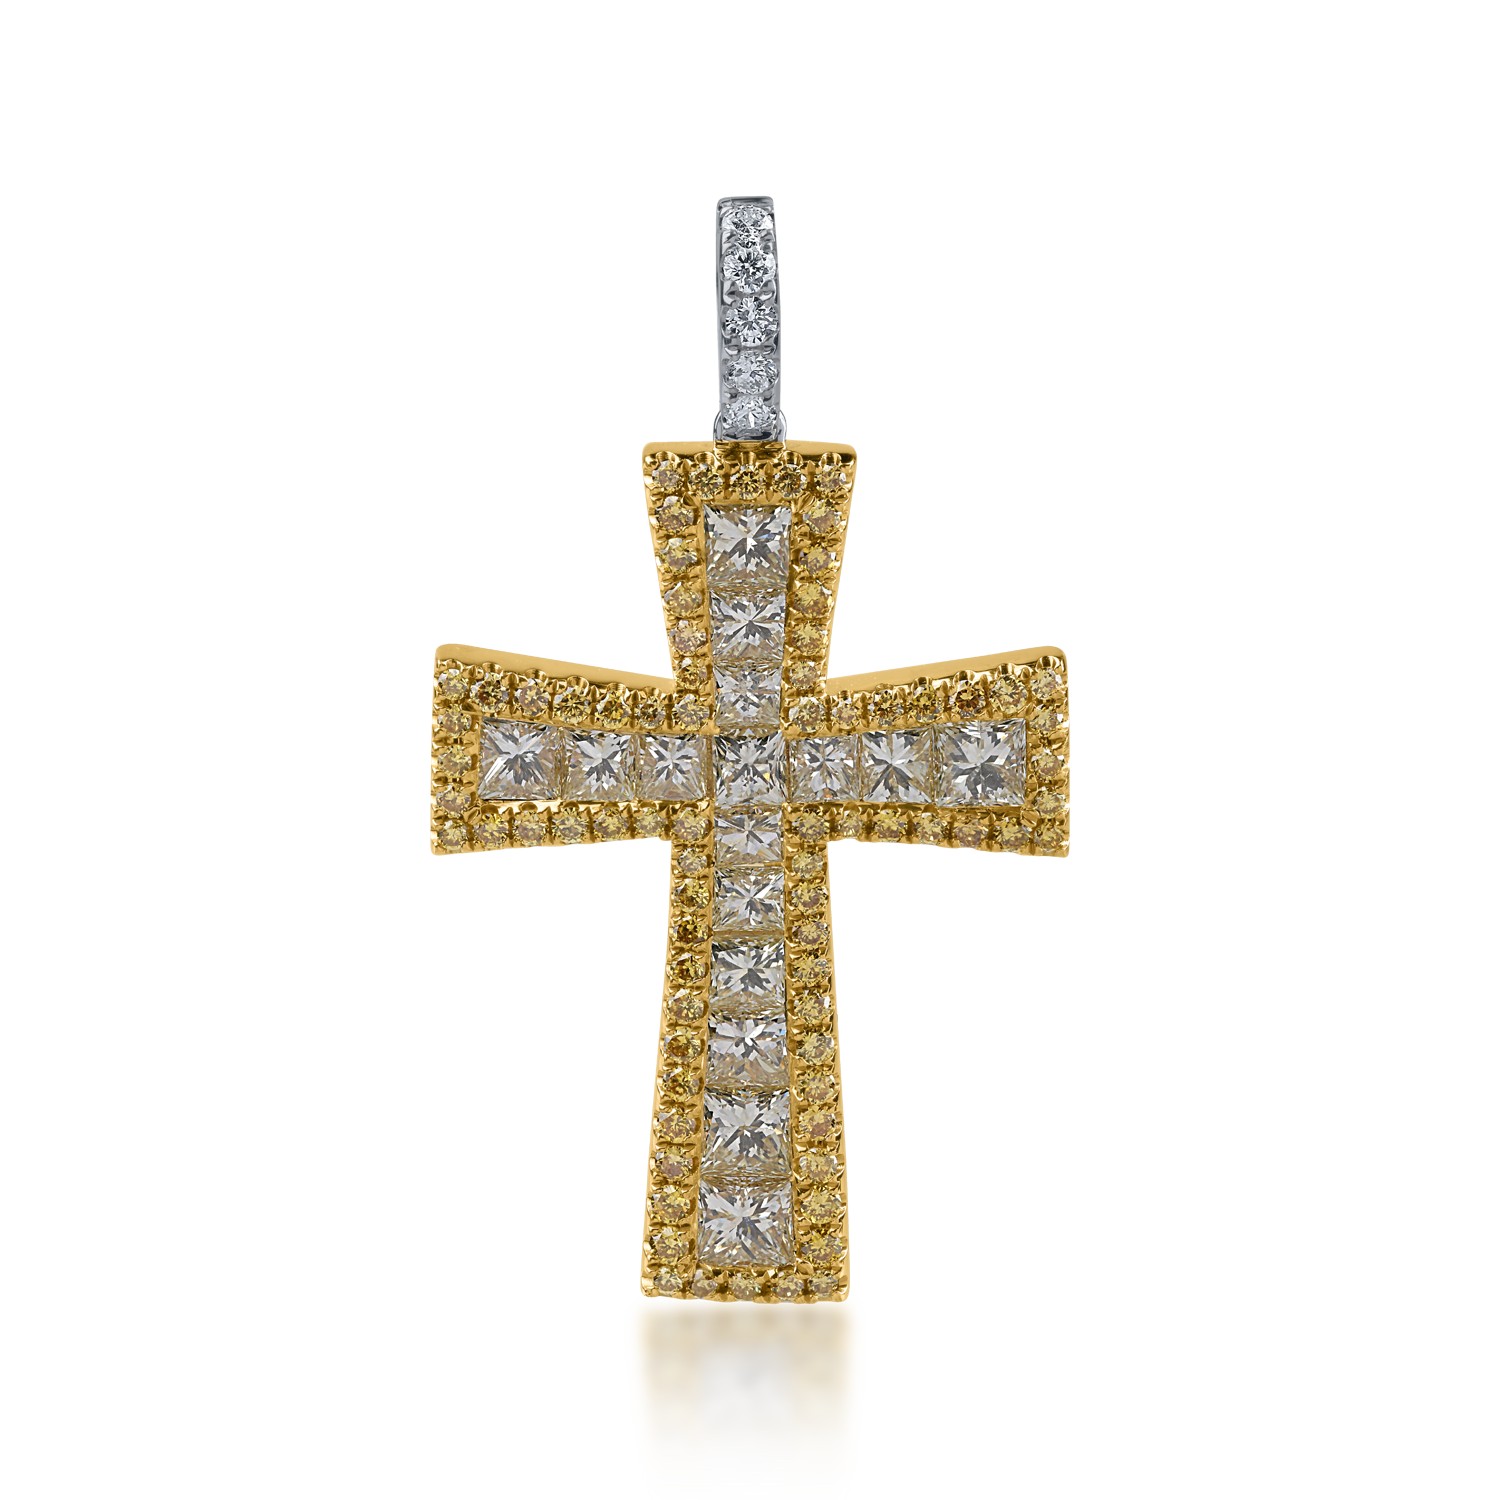 Pandantiv cruce din aur alb-galben cu diamante galbene de 2.5ct si diamante incolore de 0.08ct